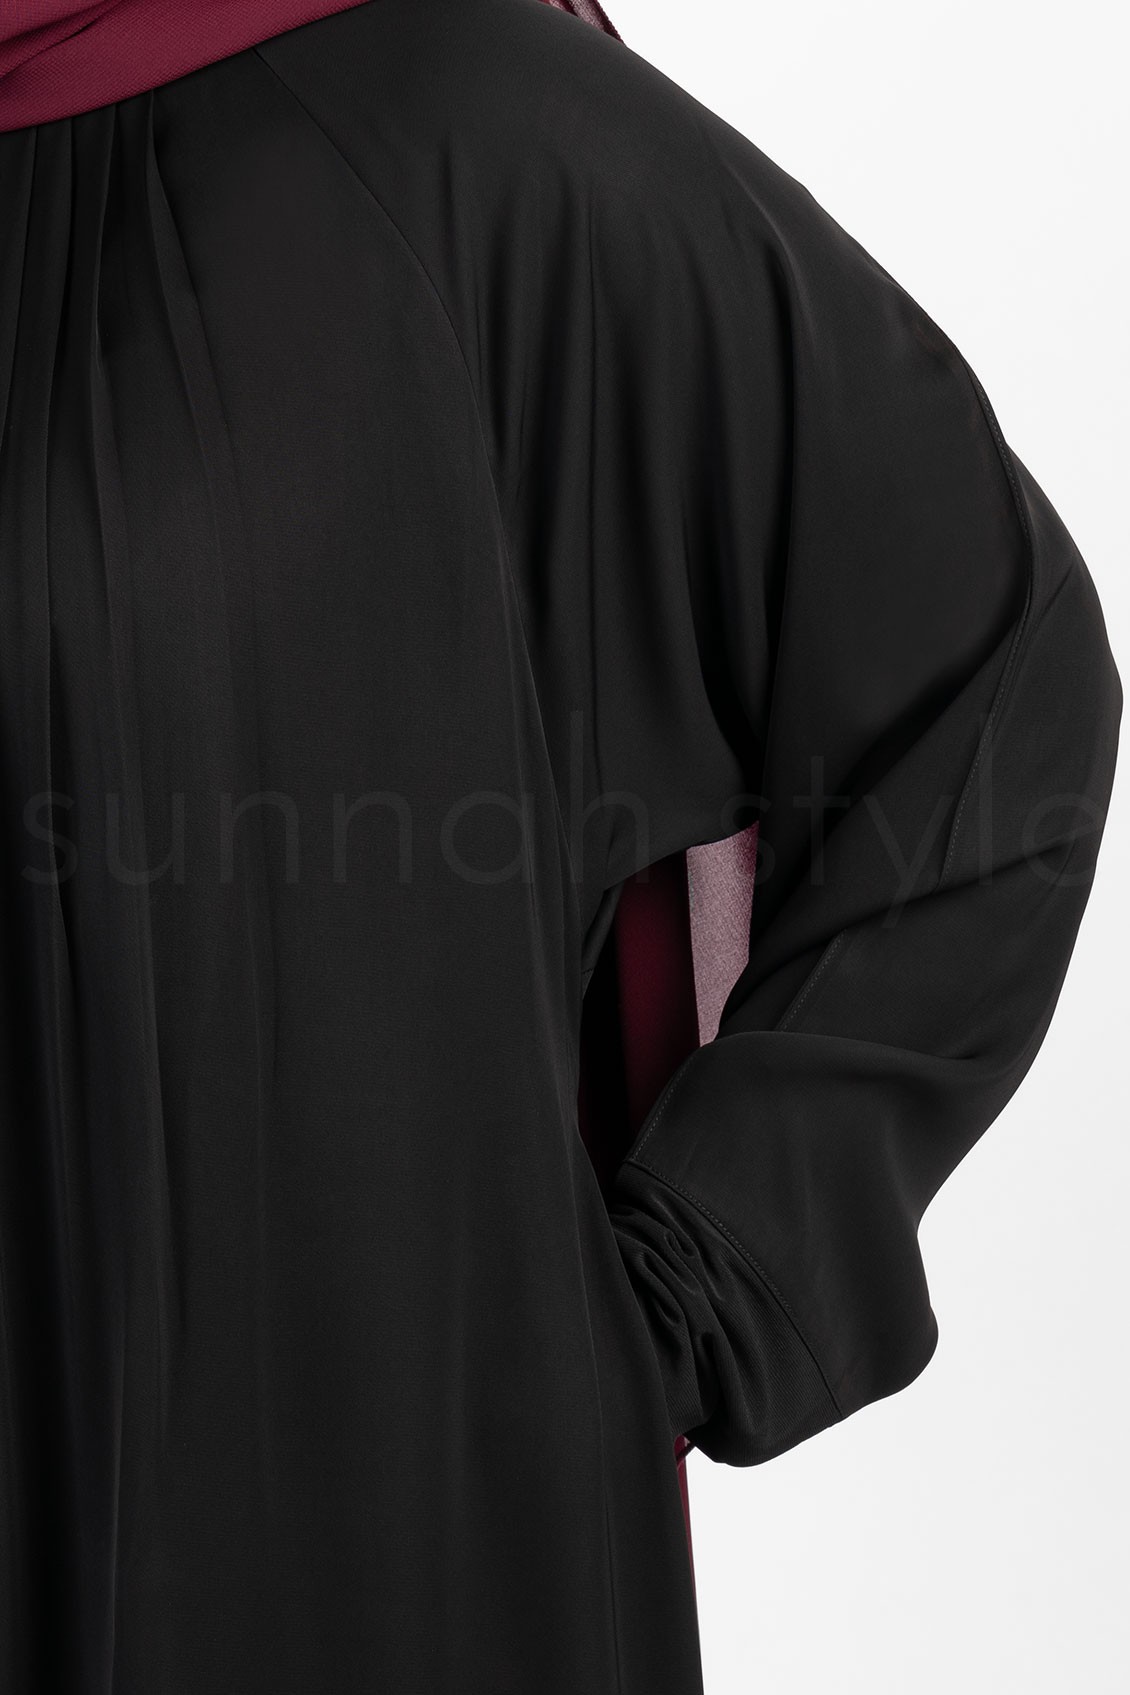 Sunnah Style Simplicity Umbrella Abaya Black